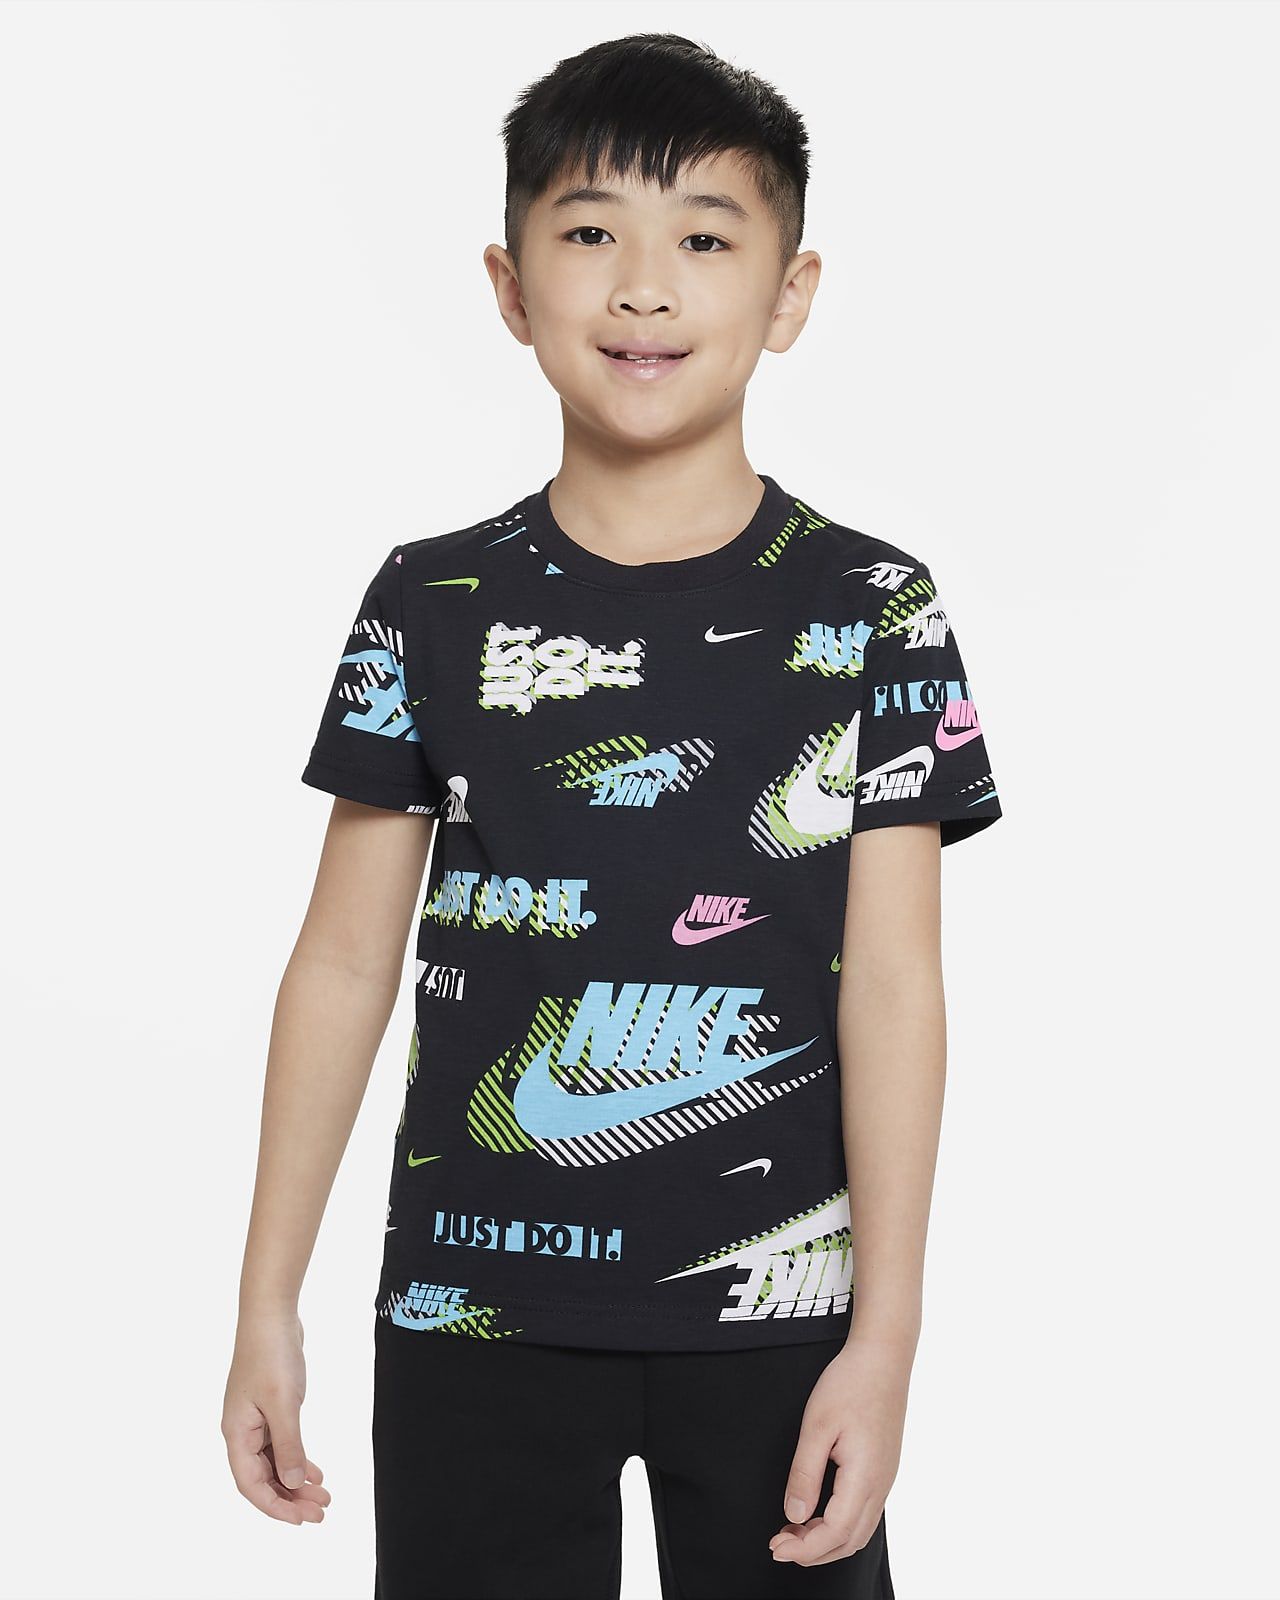 Nike Active Pack Printed Tee Little Kids' T-Shirt. Nike.com | Nike (US)